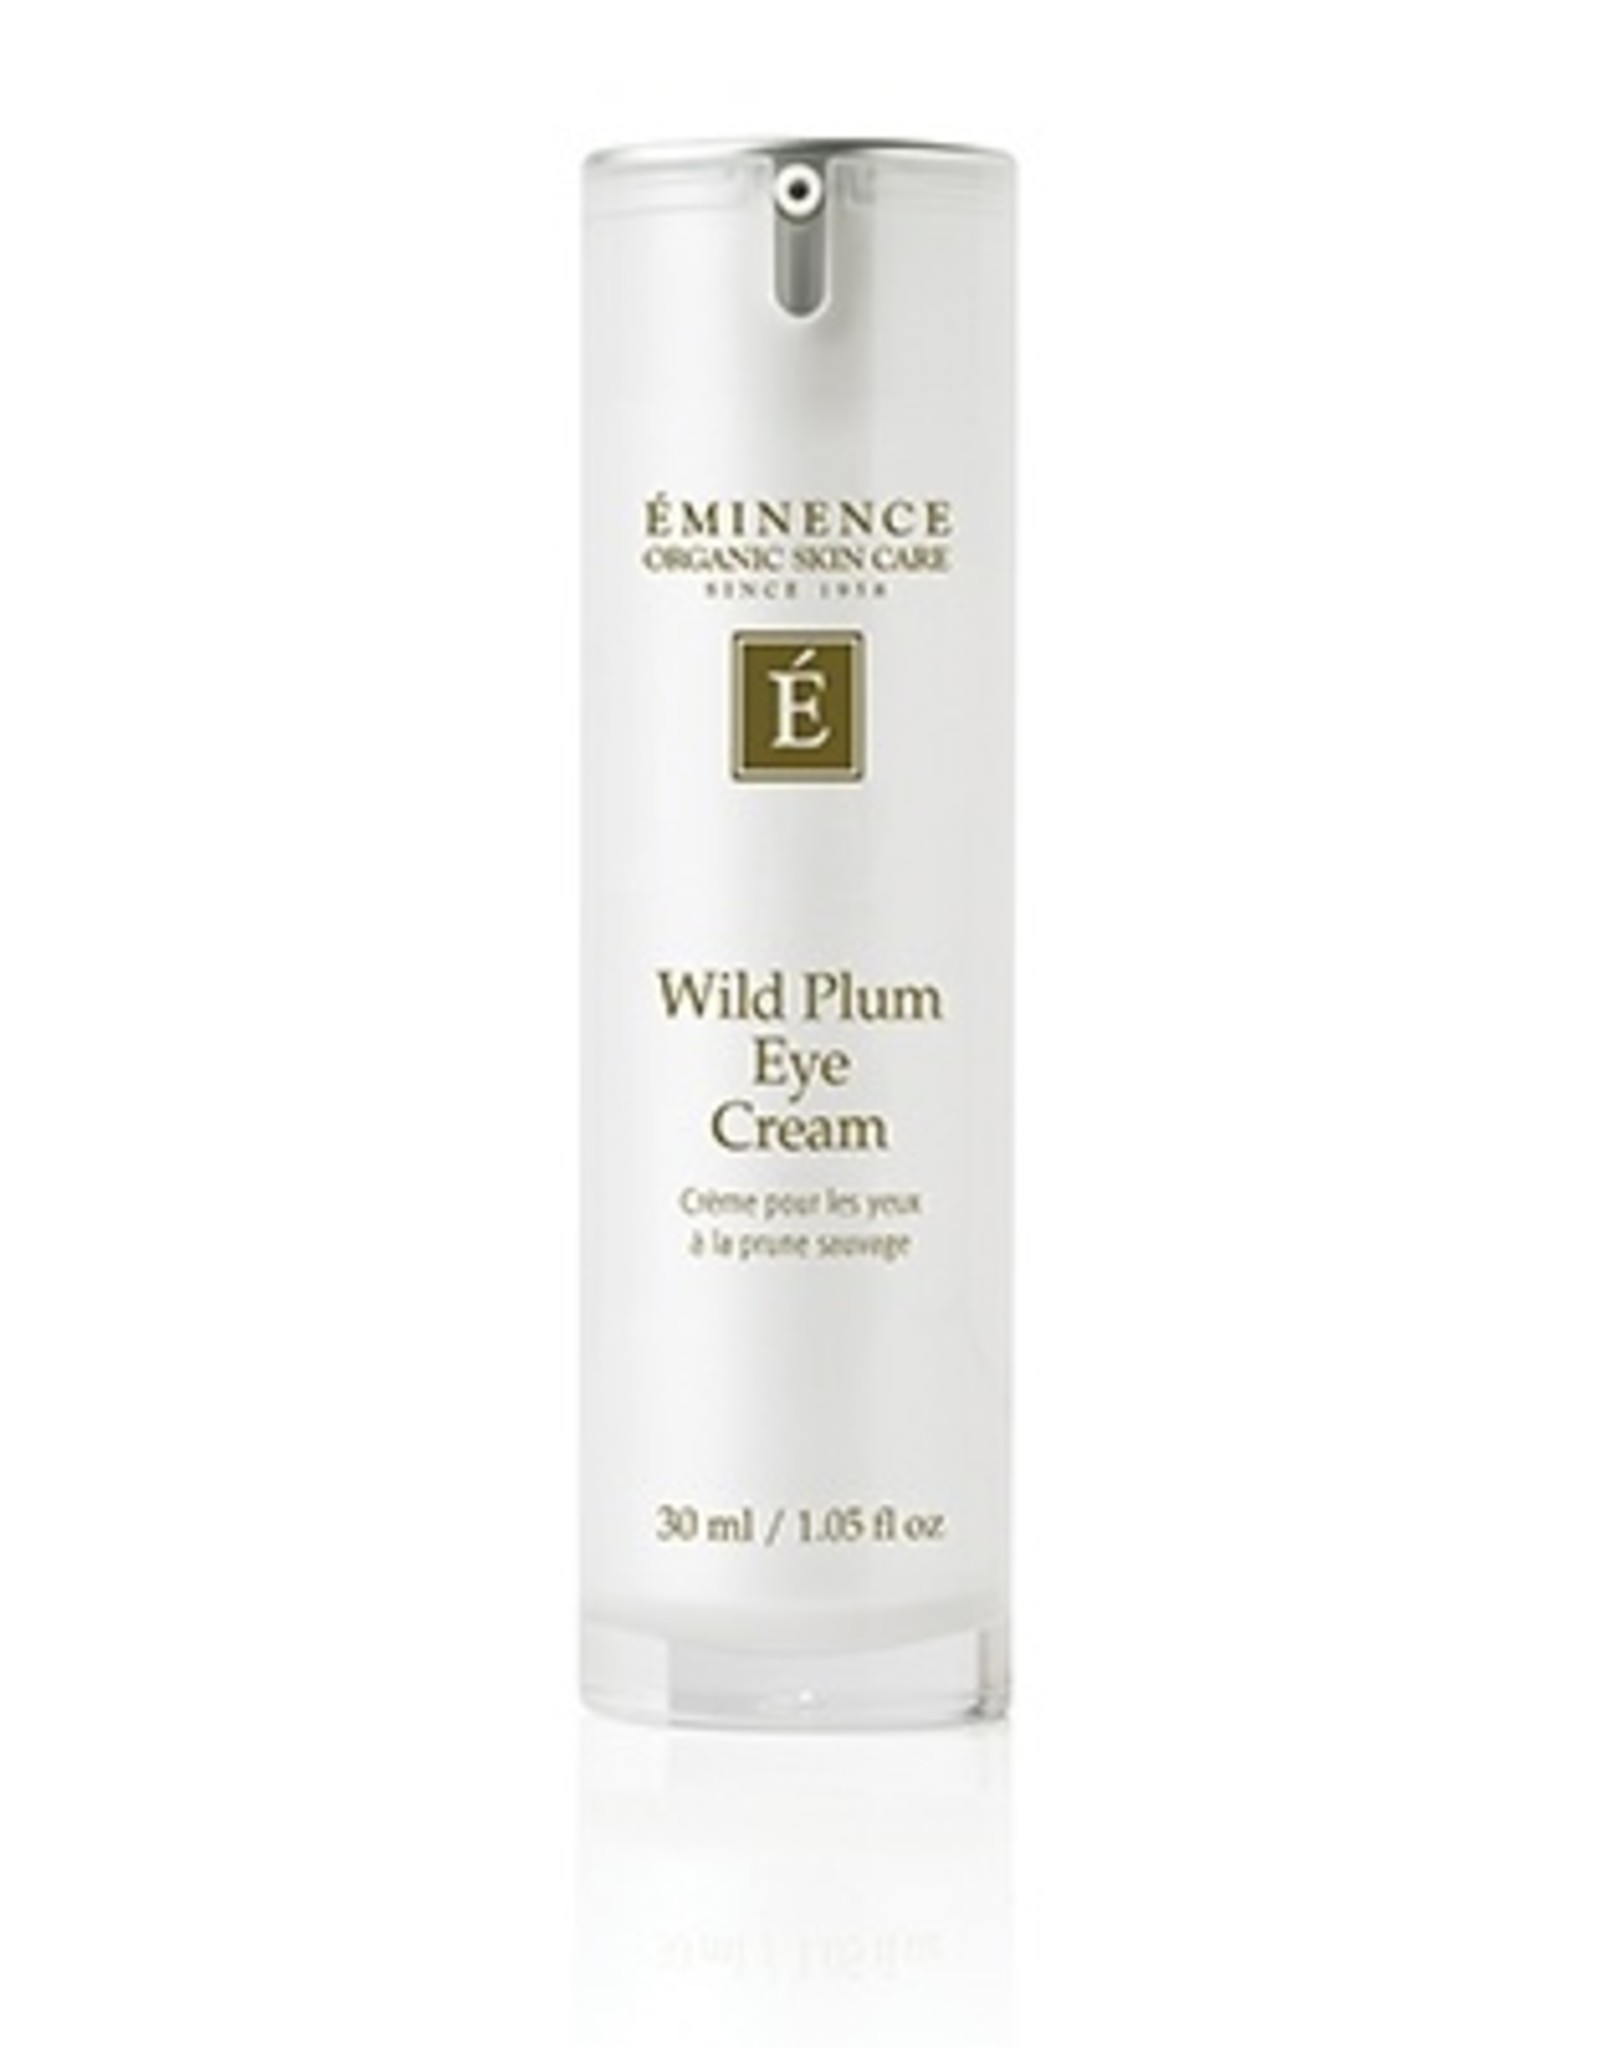 Eminence Organic Skin Care Wild Plum Eye Cream